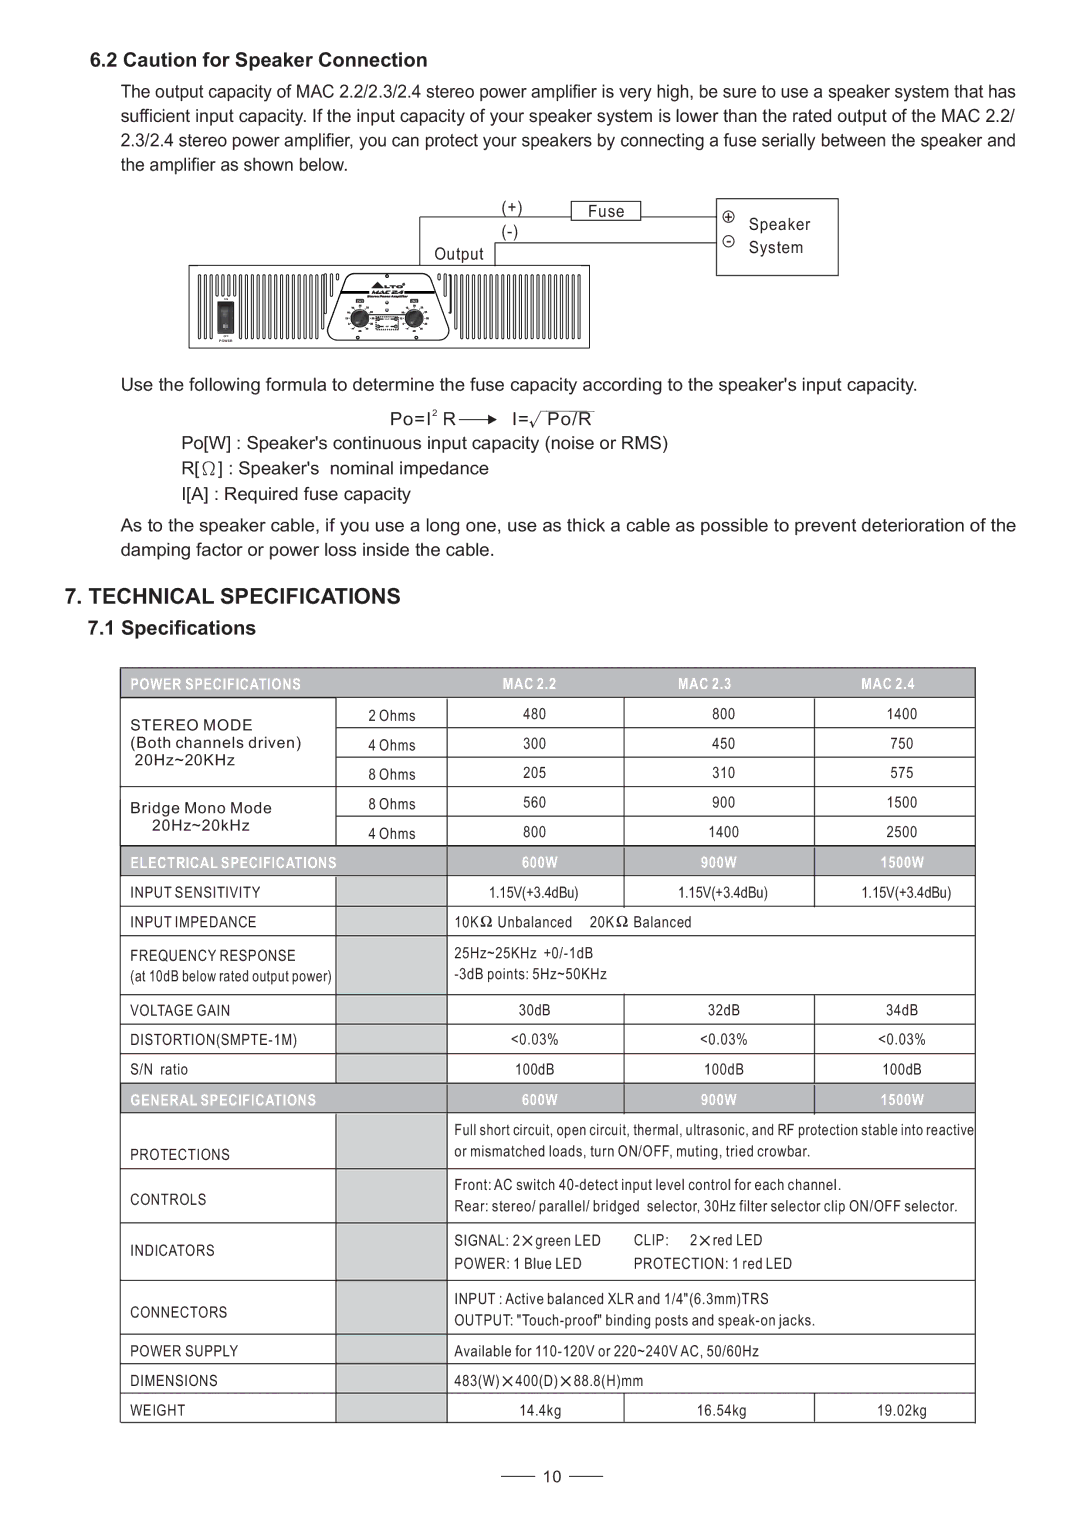 Nilfisk-ALTO MAC 2.3, MAC 2.4 user manual Technical Specifications 